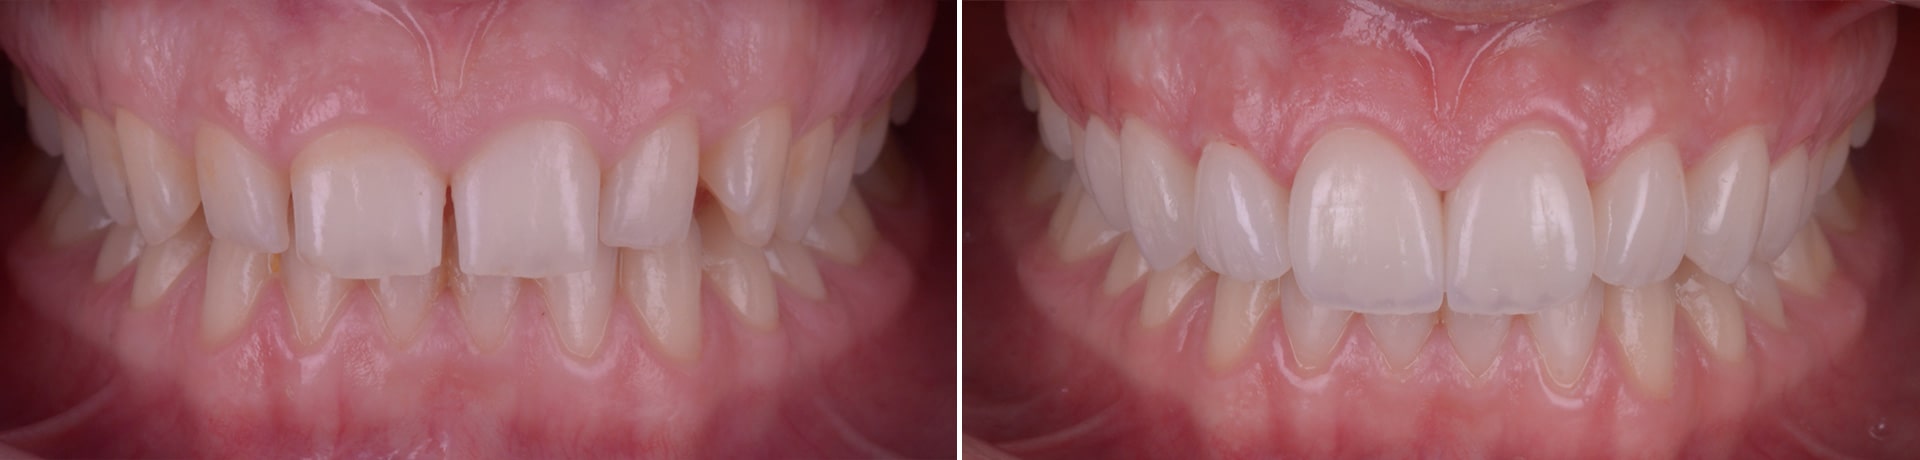 clinica dentara timisoara stomatologie clinica rugina